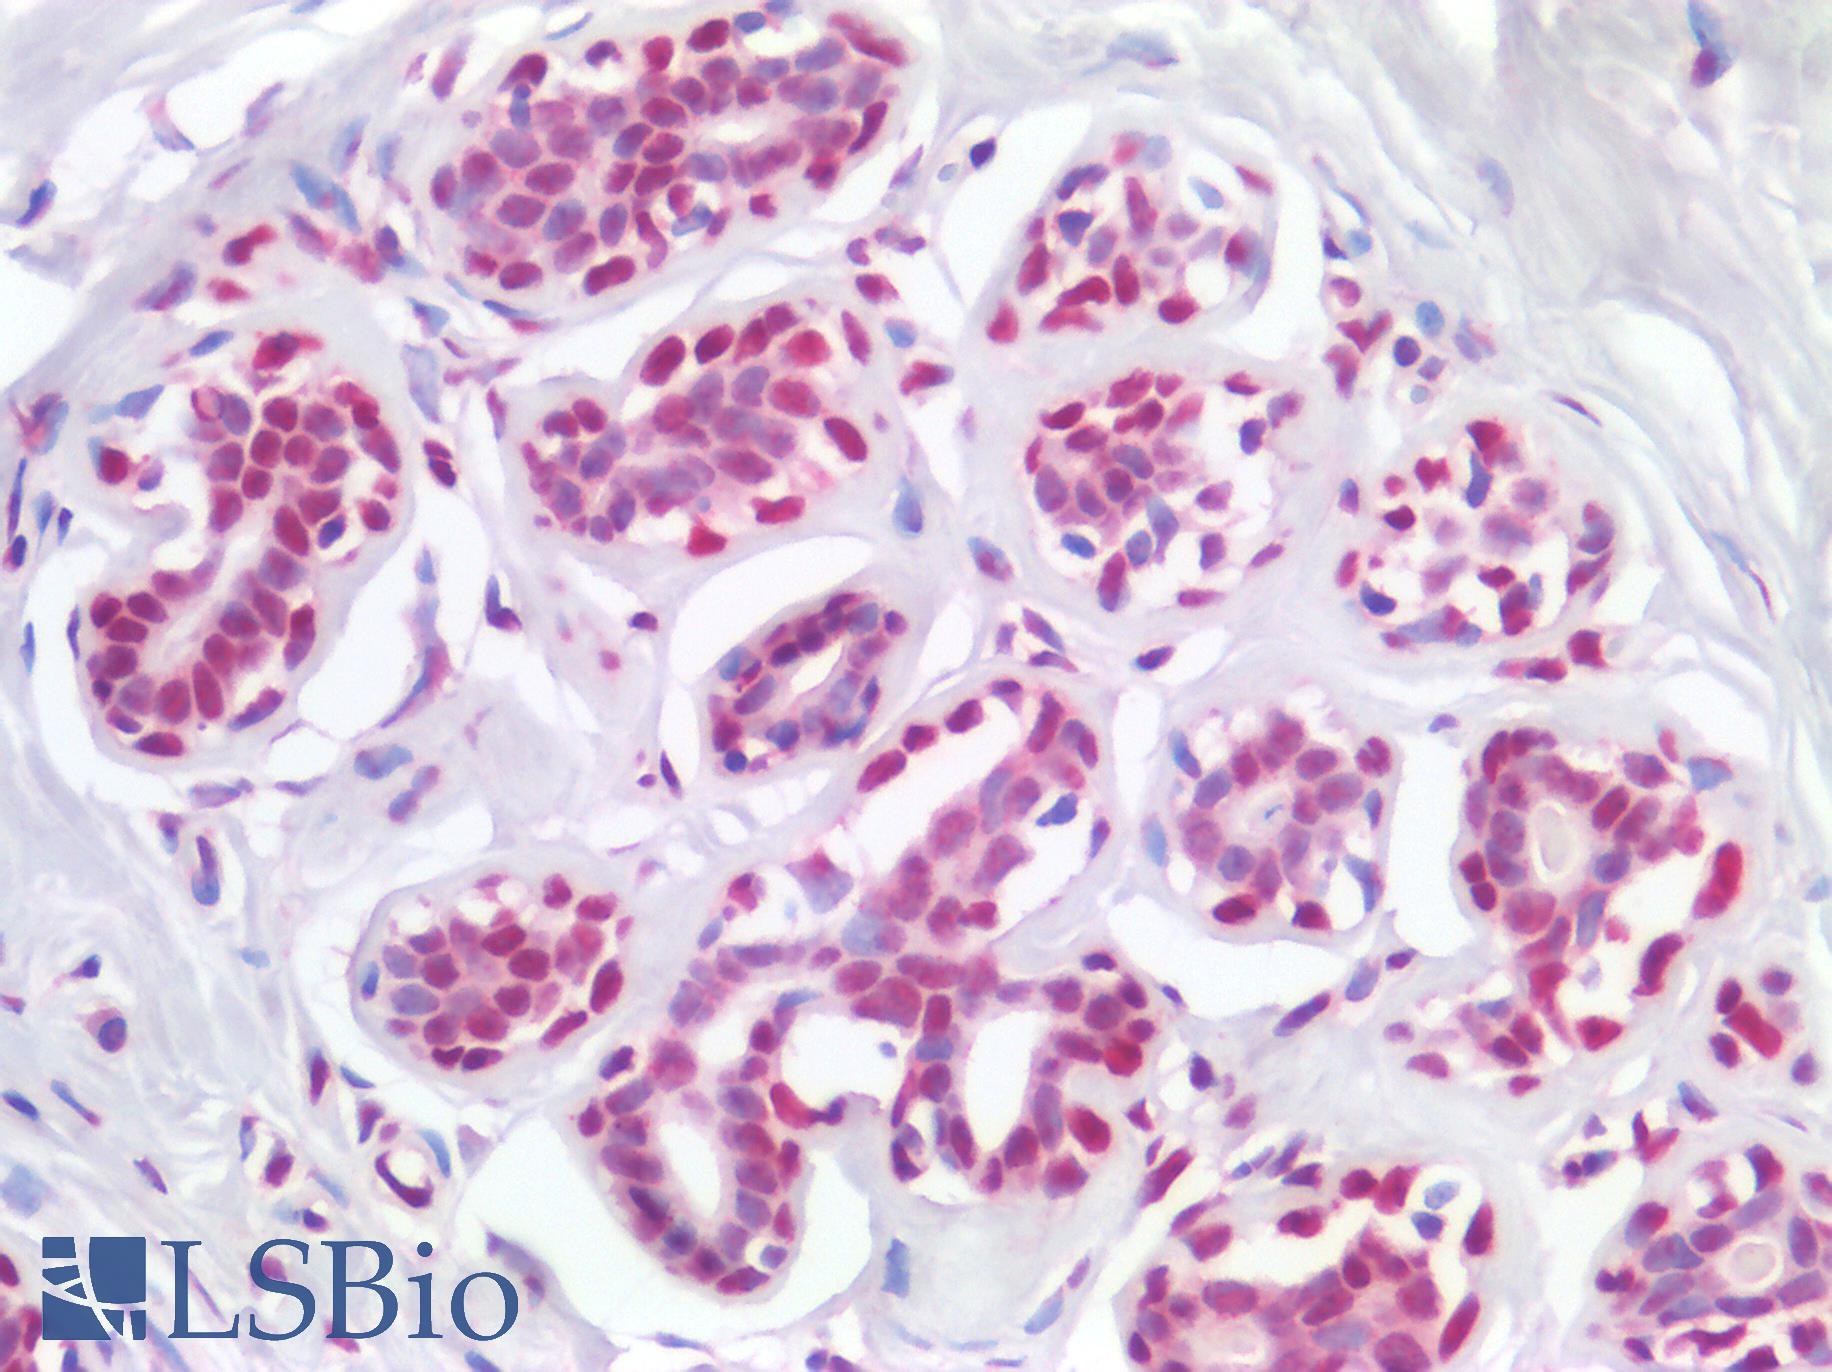 HMG1 / HMGB1 Antibody - Human Breast: Formalin-Fixed, Paraffin-Embedded (FFPE)